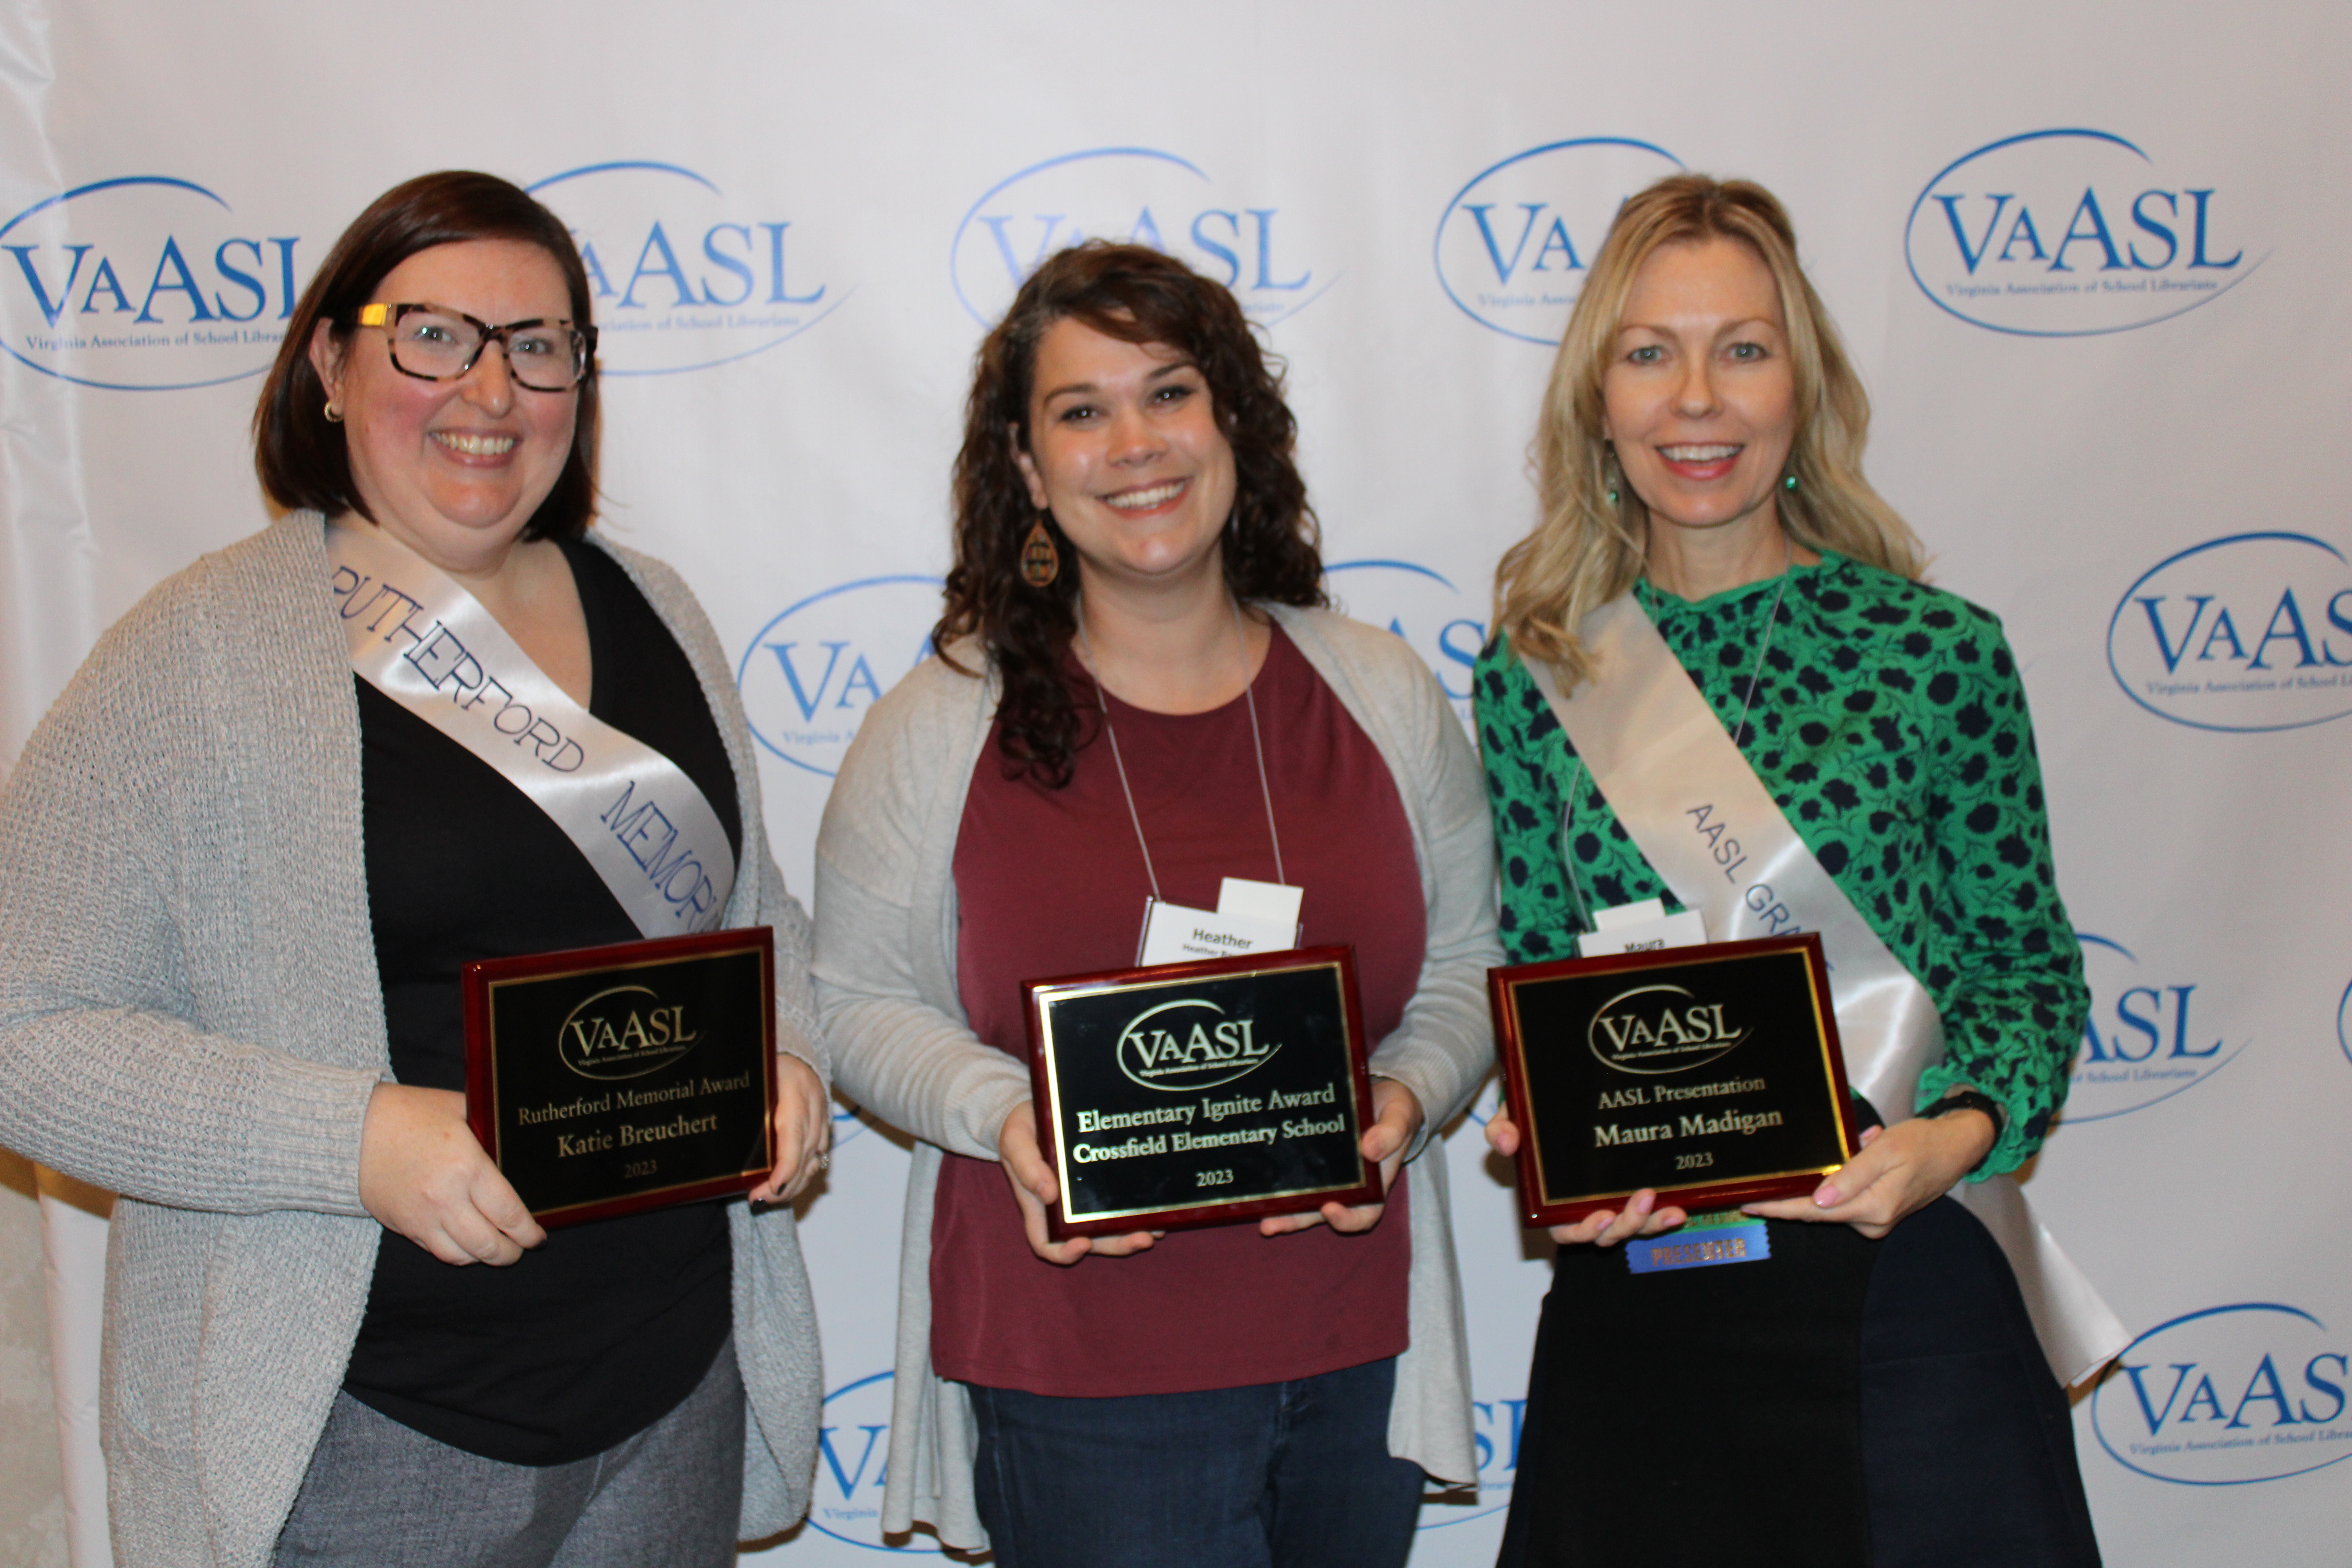 Katie Bruechert, Heather Baucum, and Maura Madigan pose with their awards